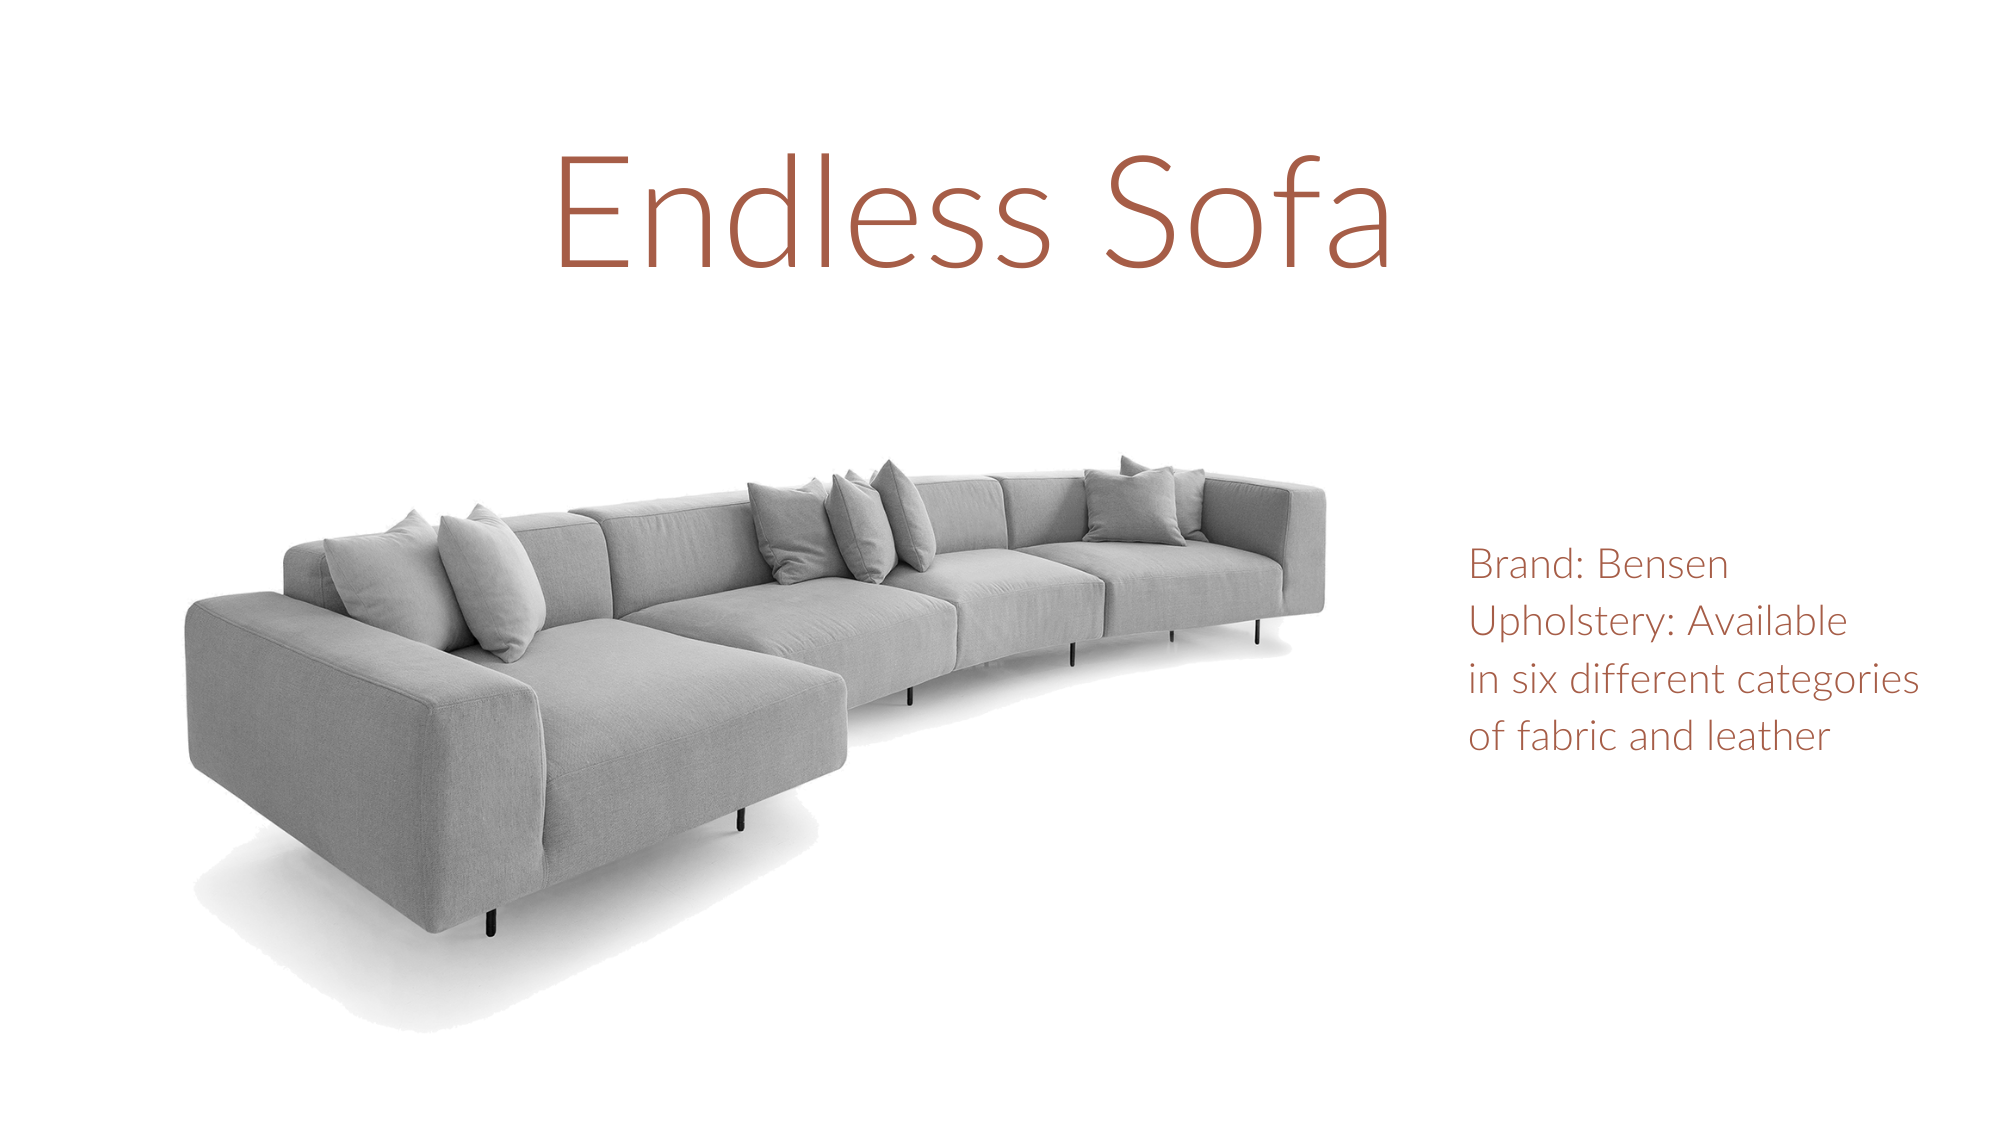 Bensen Endless sofa in grey